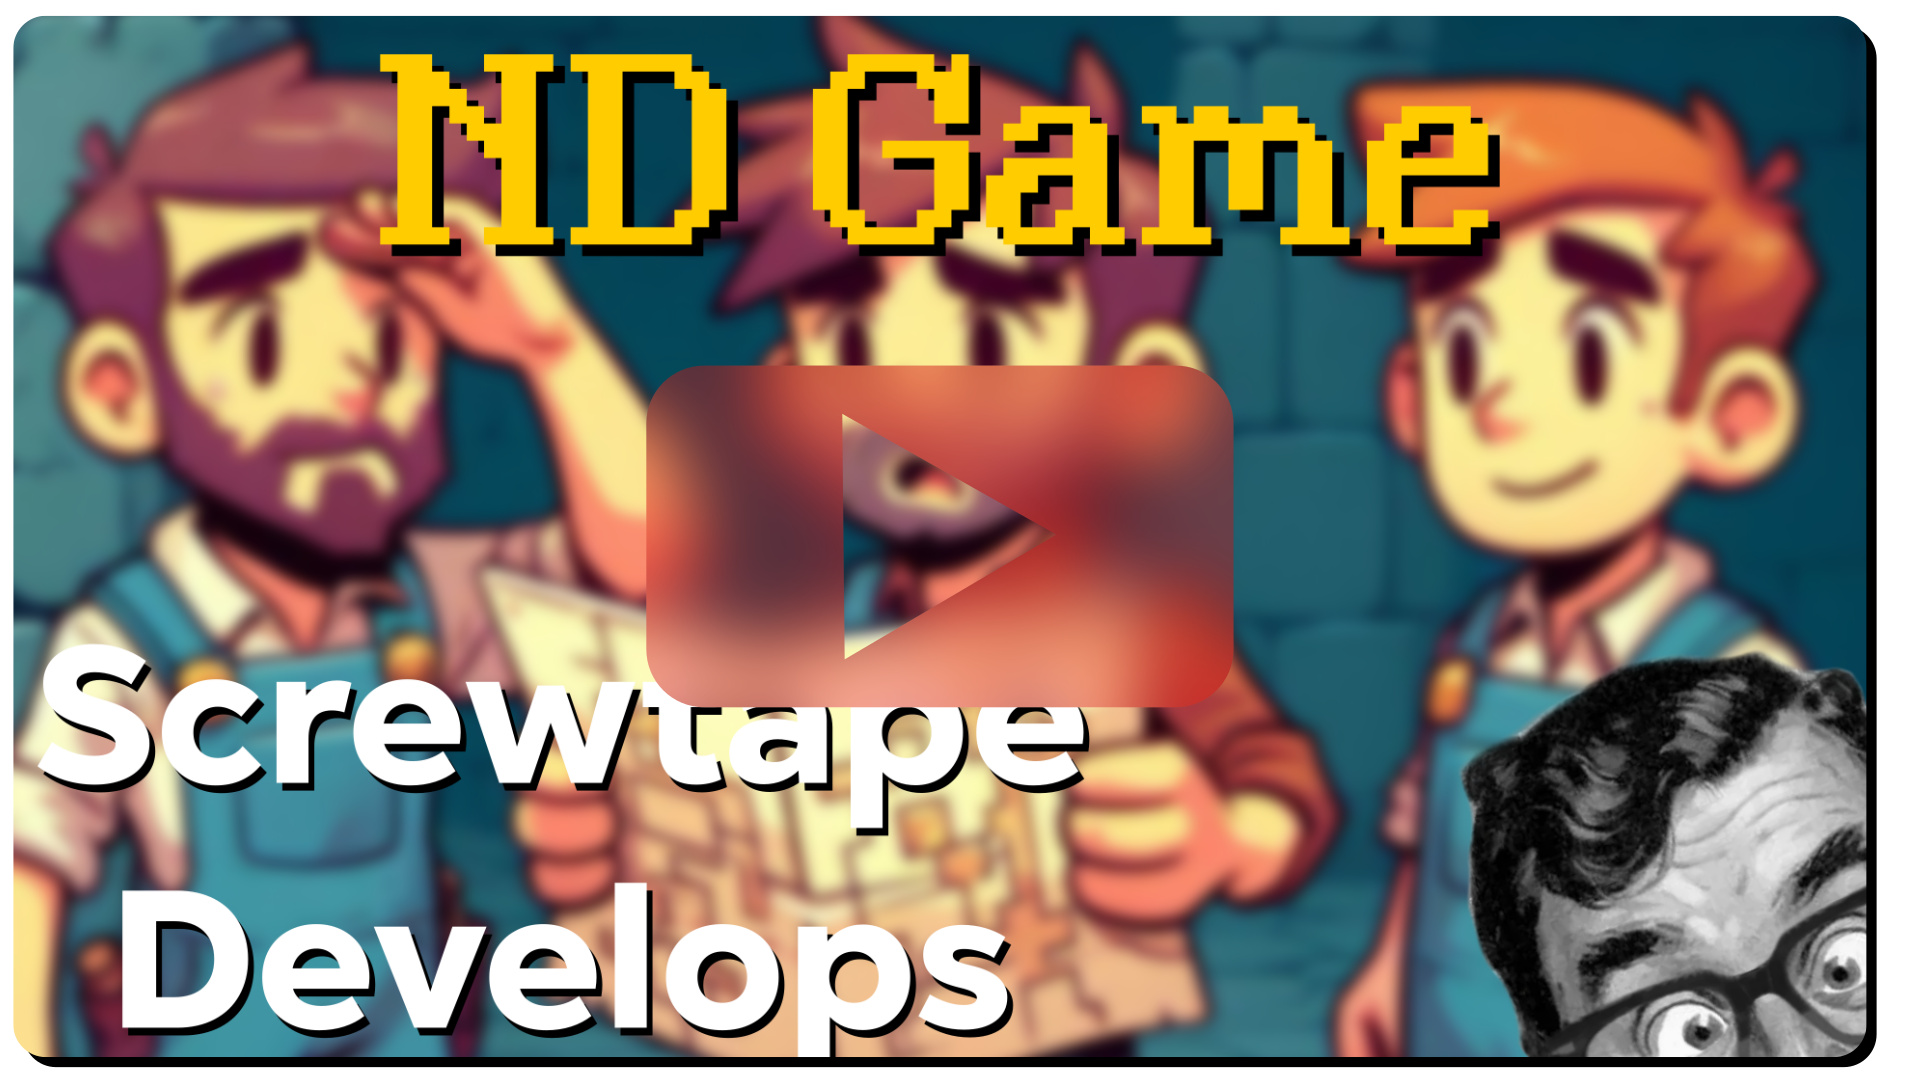 ND Game LIVE YouTube Development